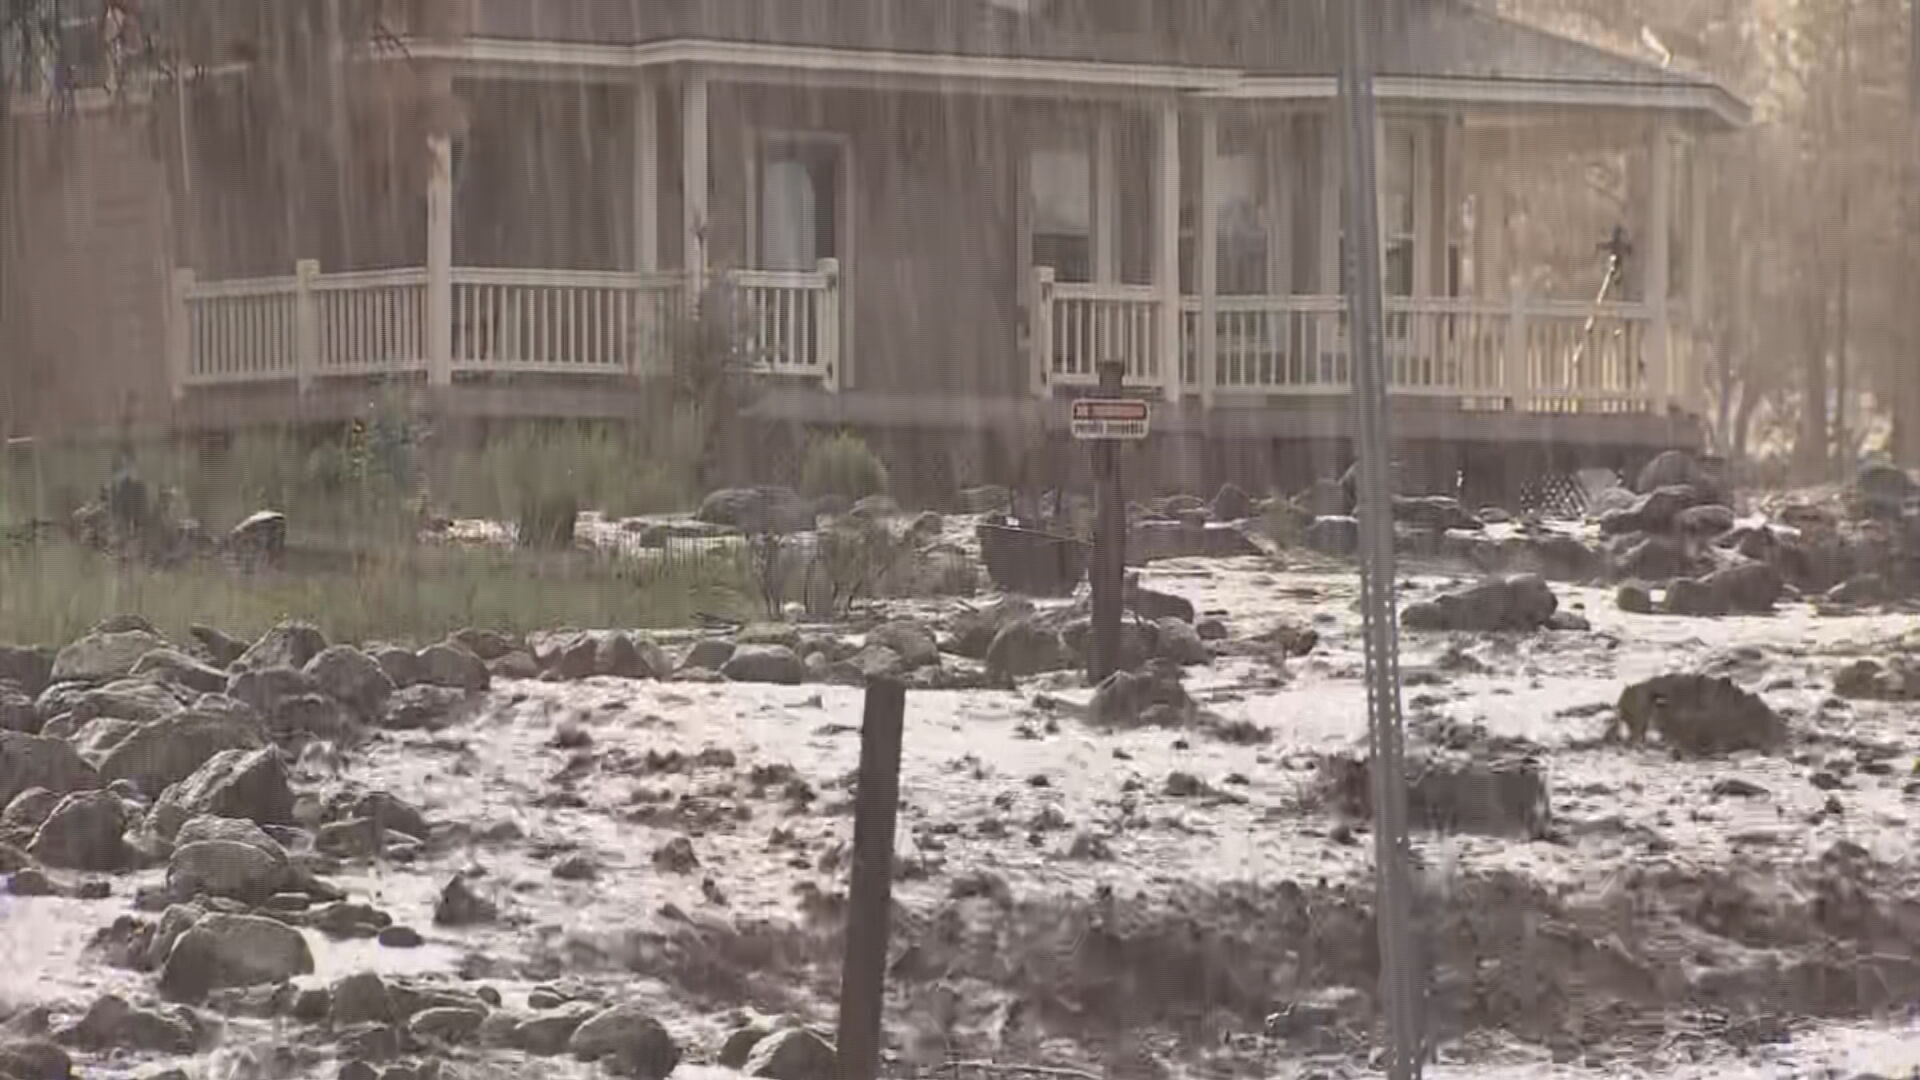 Monsoon rain overflows washes in Flagstaff, creating muddy mess